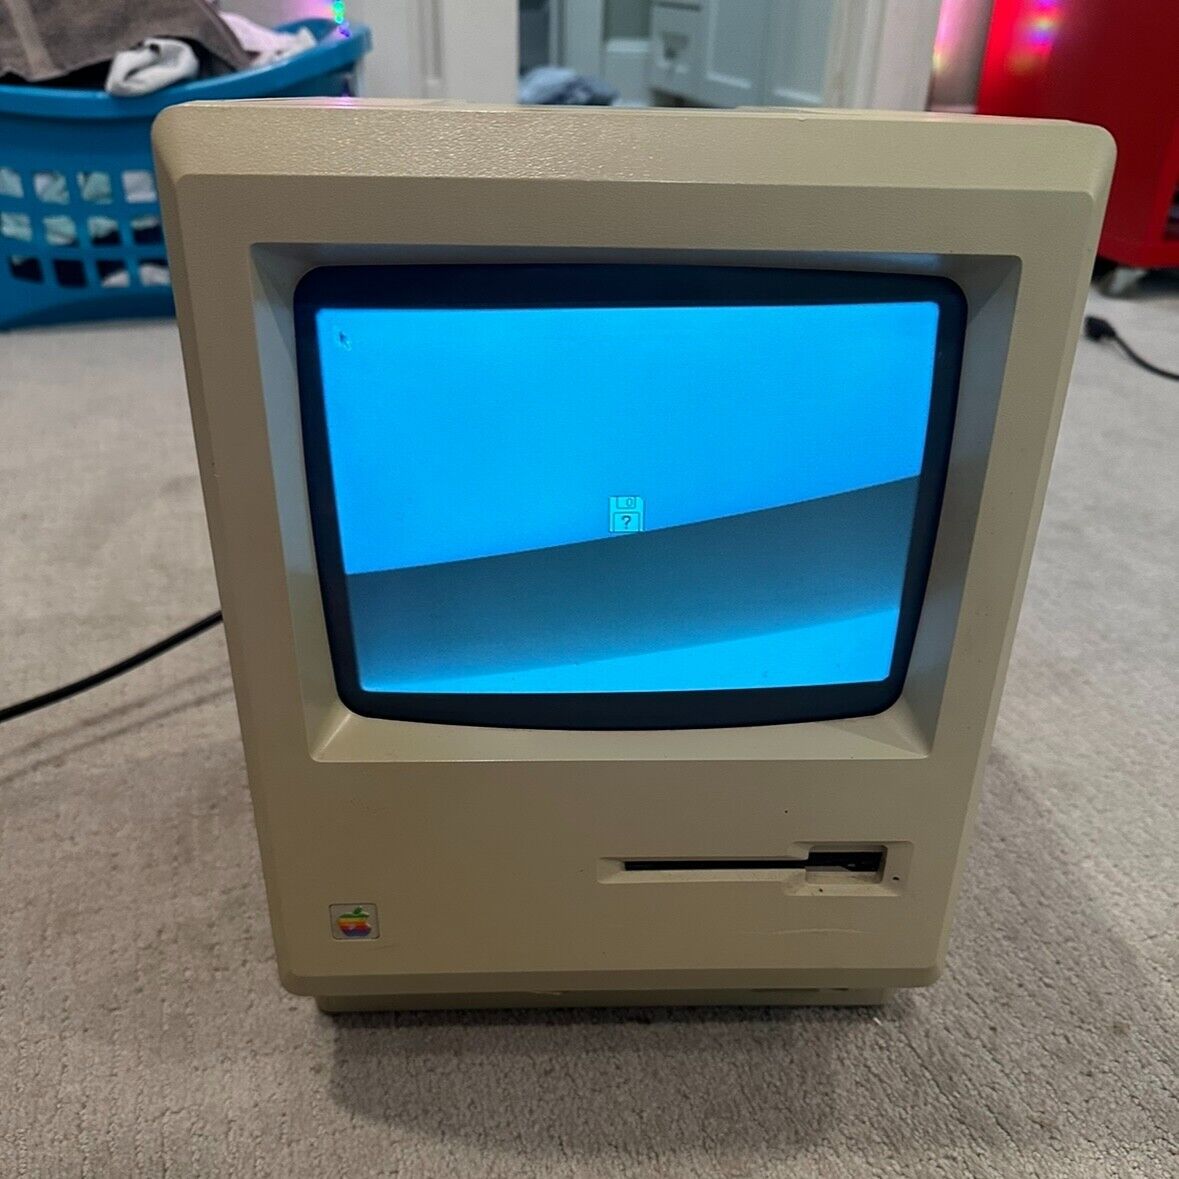 Vintage Apple Macintosh Plus Desktop Computer - M0001A